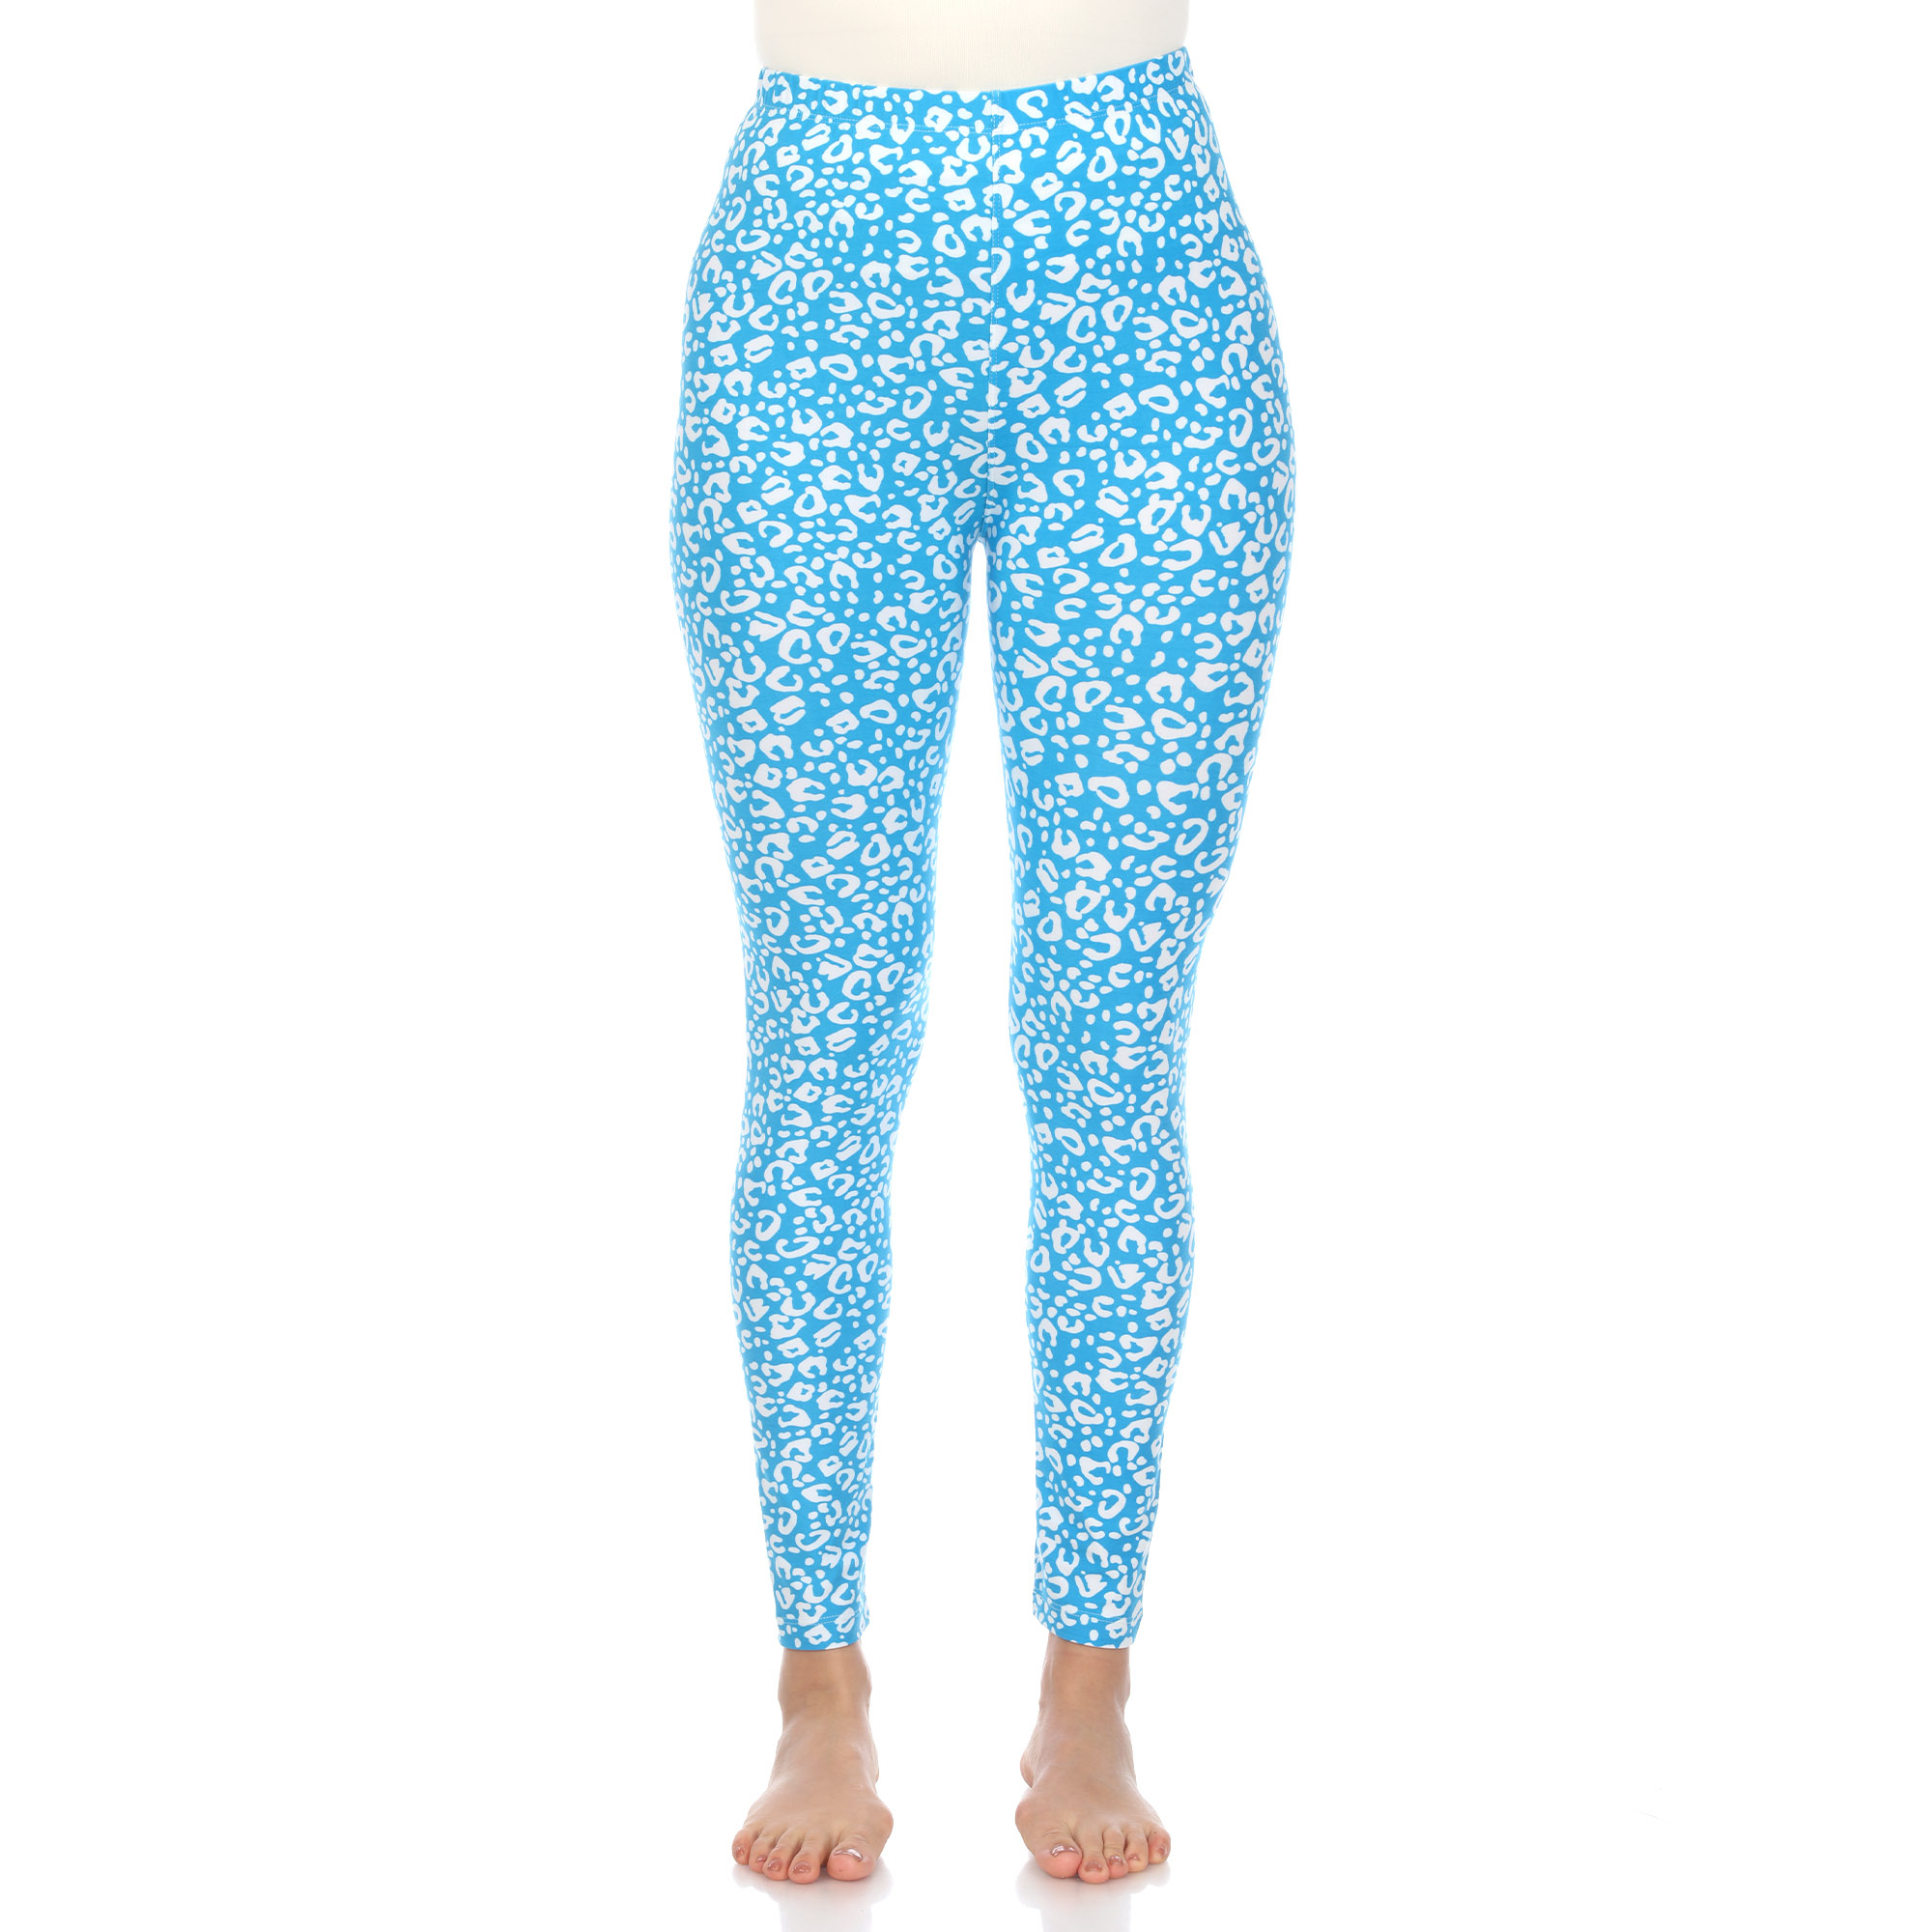 White Mark Women's Leopard Print Stretch Leggings - Blue, One Size